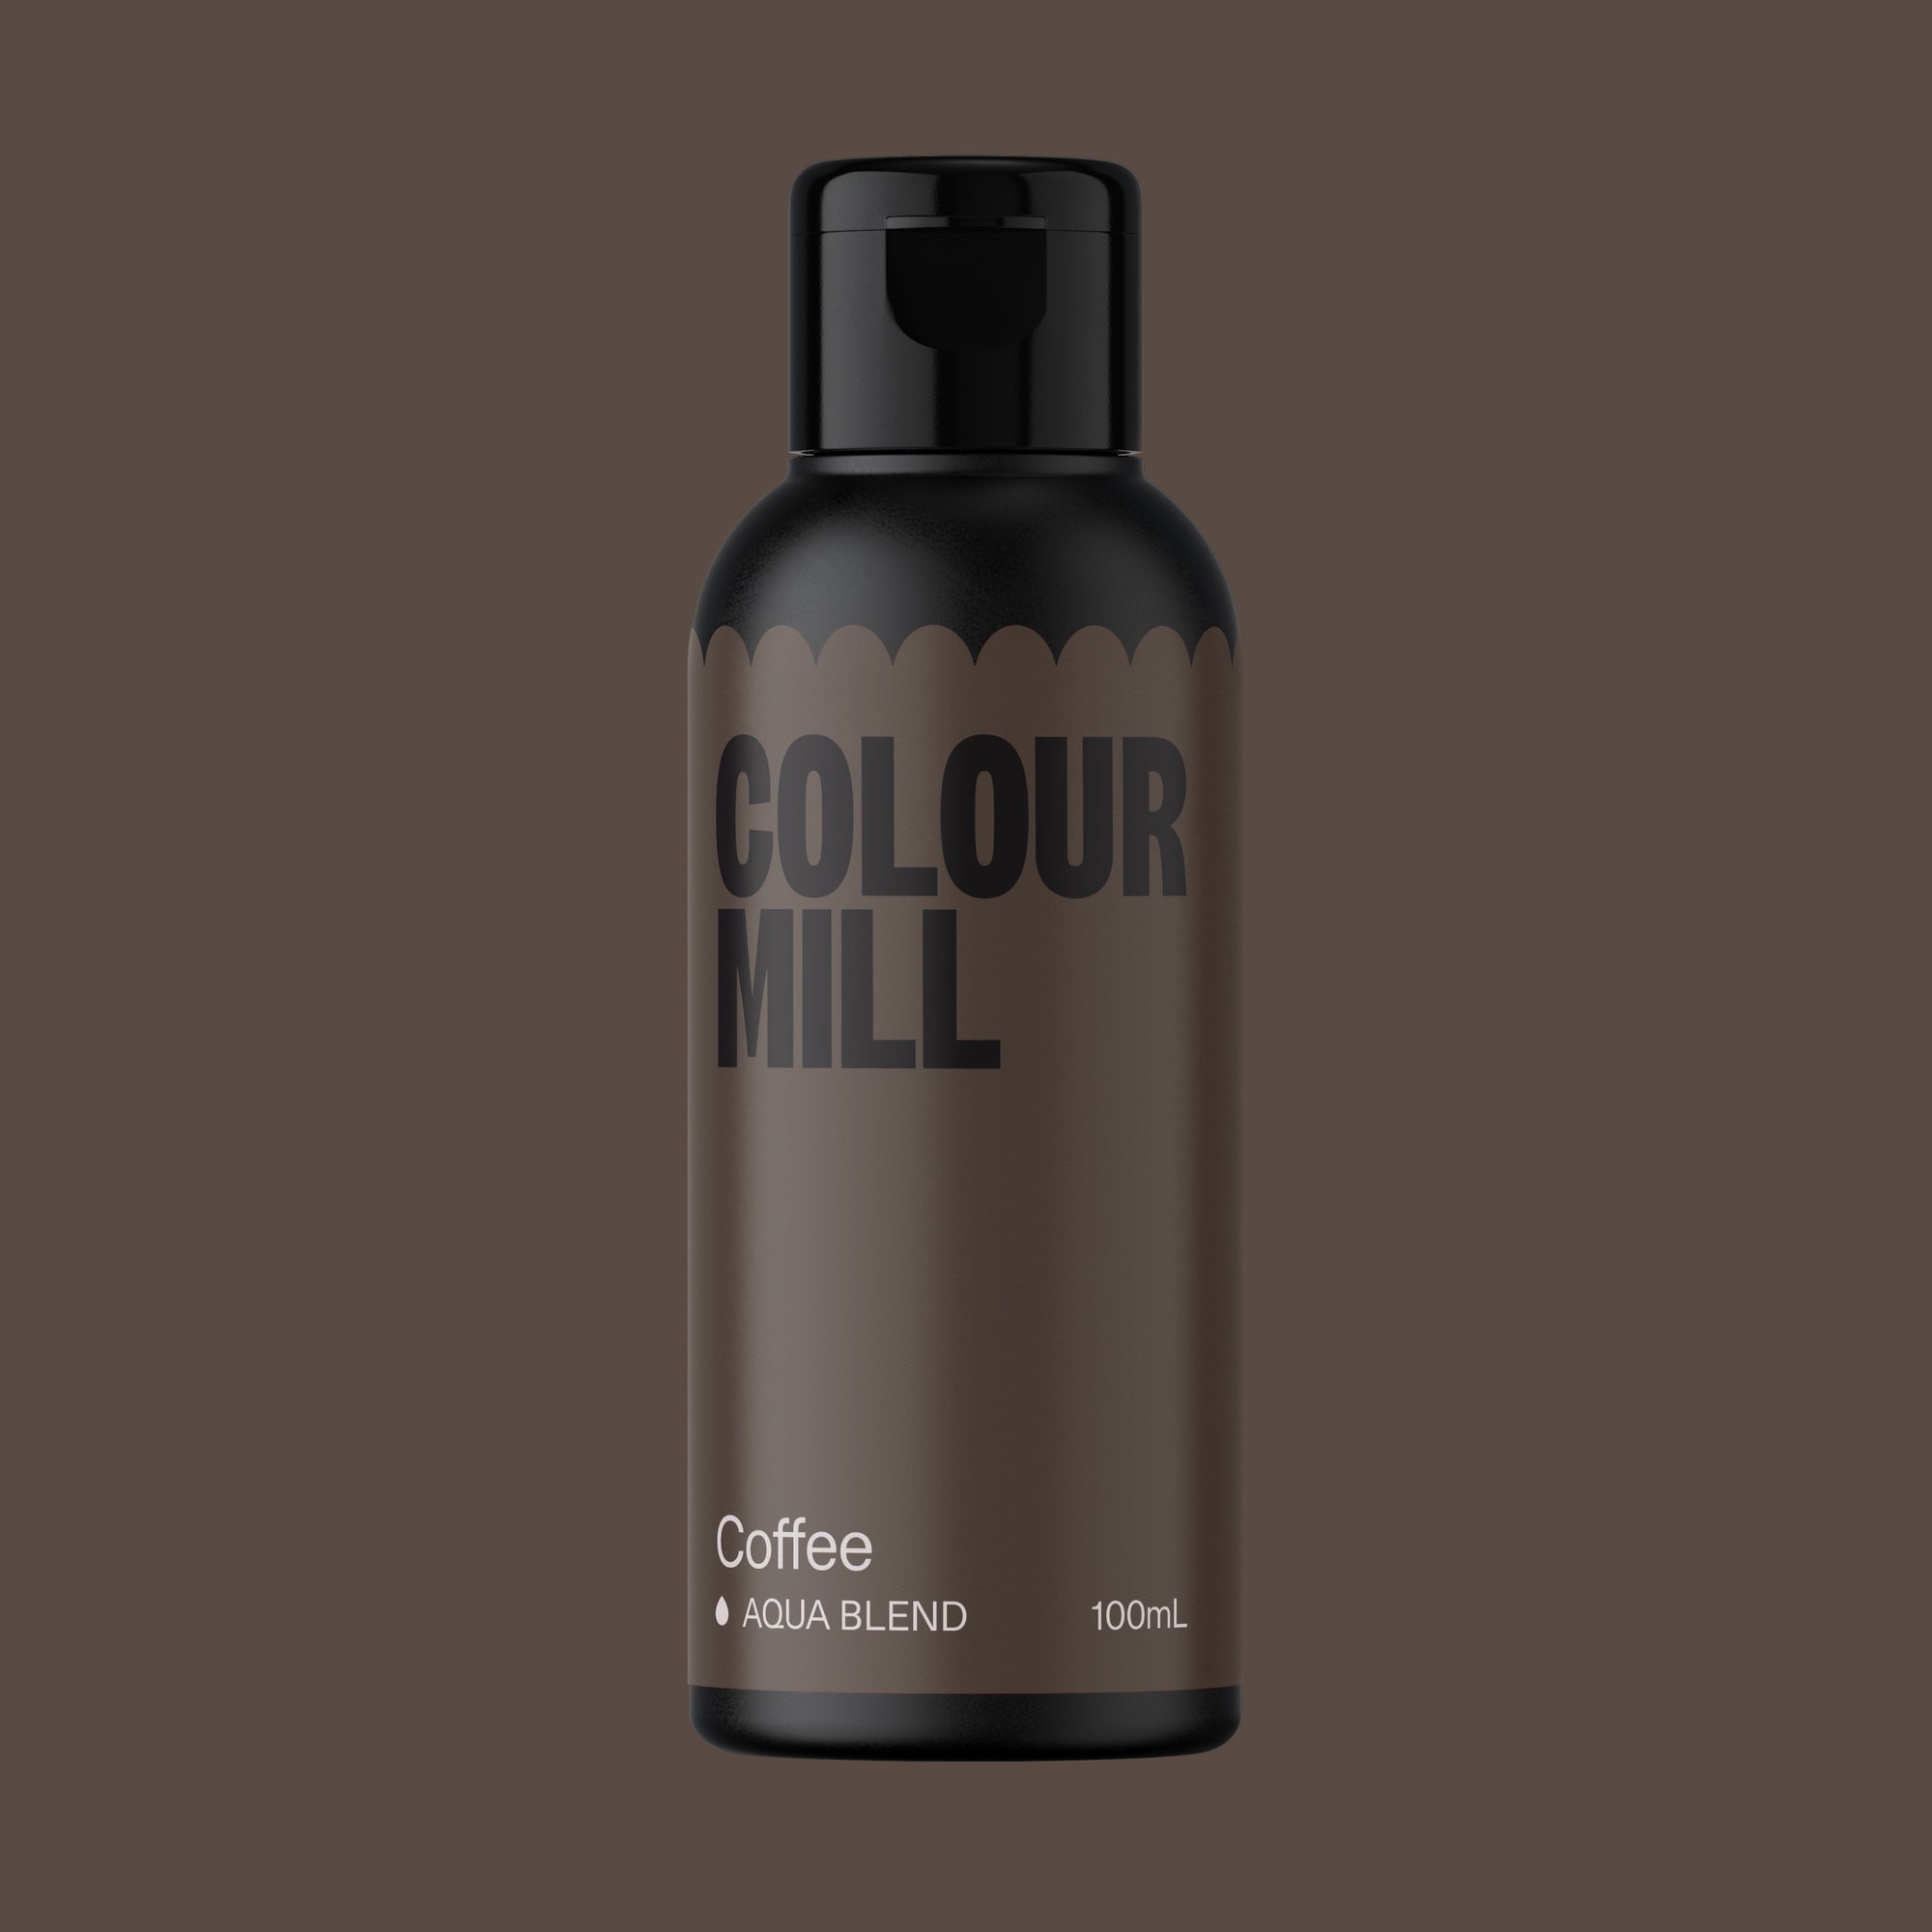 Colour Mill Aqua COFFEE 100ml